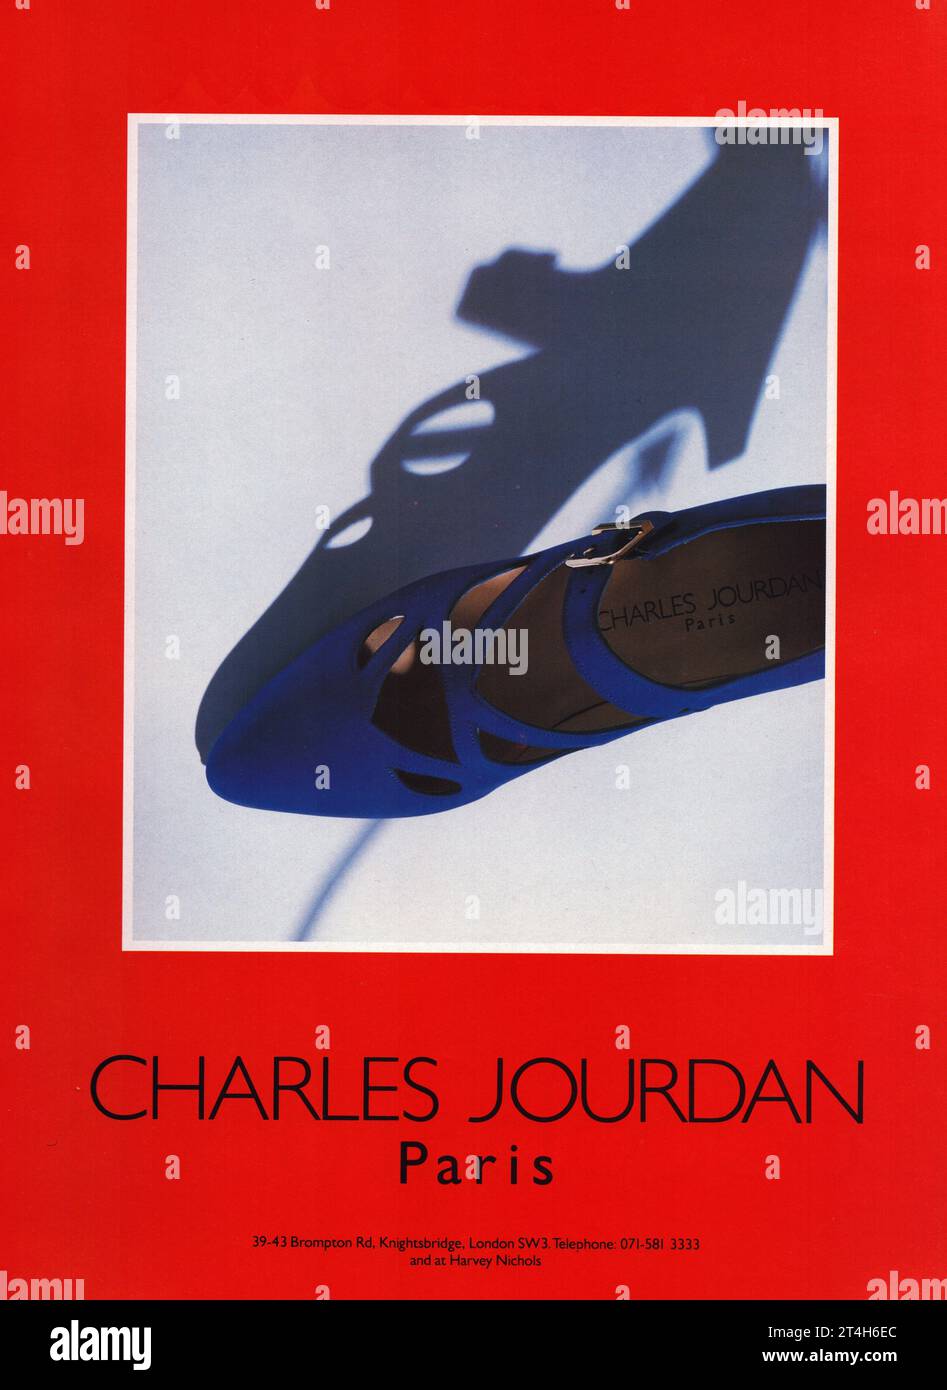 Charles Jourdan Paris blaue Schuhe Charles Jourdan Werbung für Charles Jourdan Schuhe Werbeplakat Charles Jourdan Werbeplakat Stockfoto